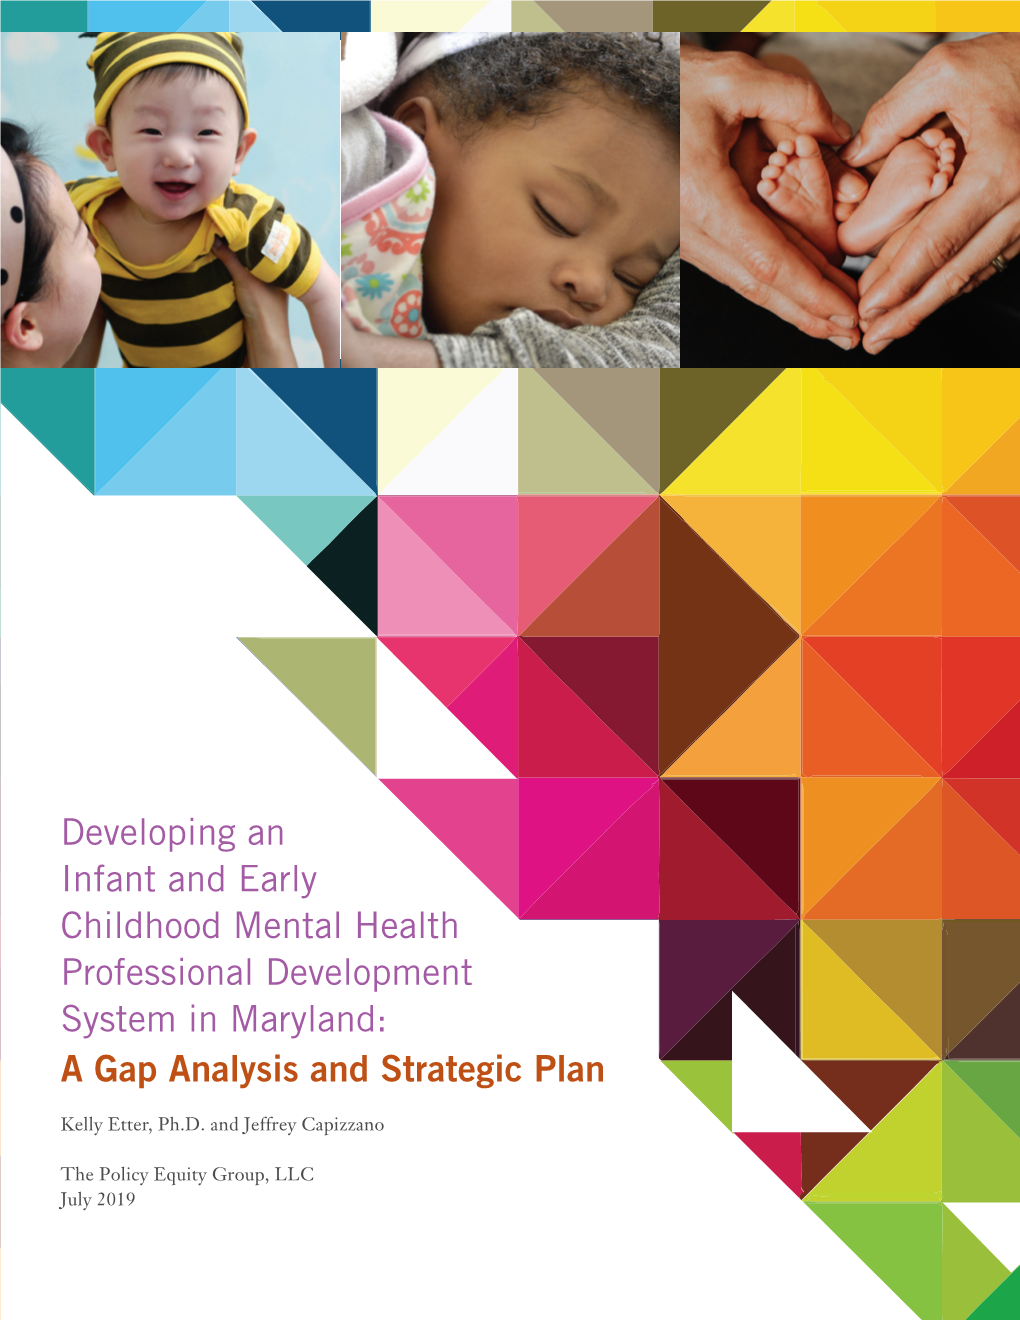 Mental Health Development System Gap Analysis and Strategic Plan